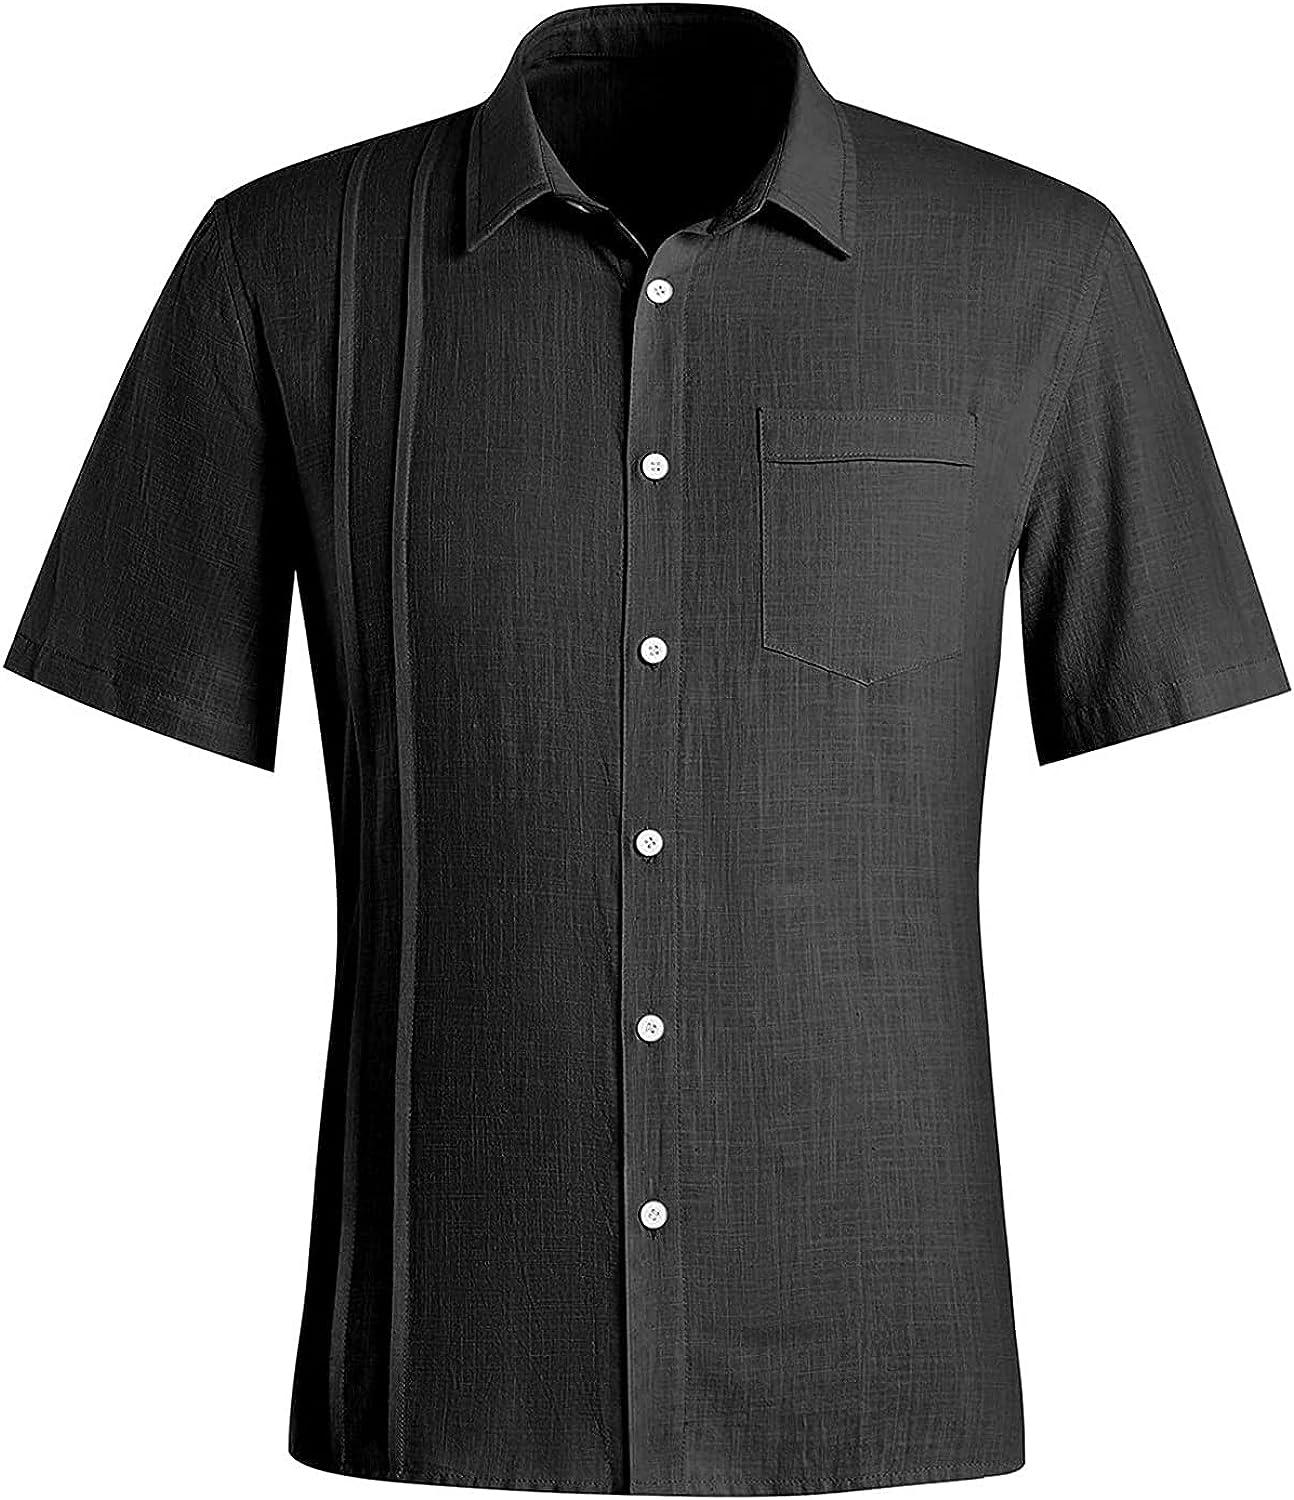 Best Deal for Button Down Shirts Casual Cotton Linen Short Sleeve Blouse